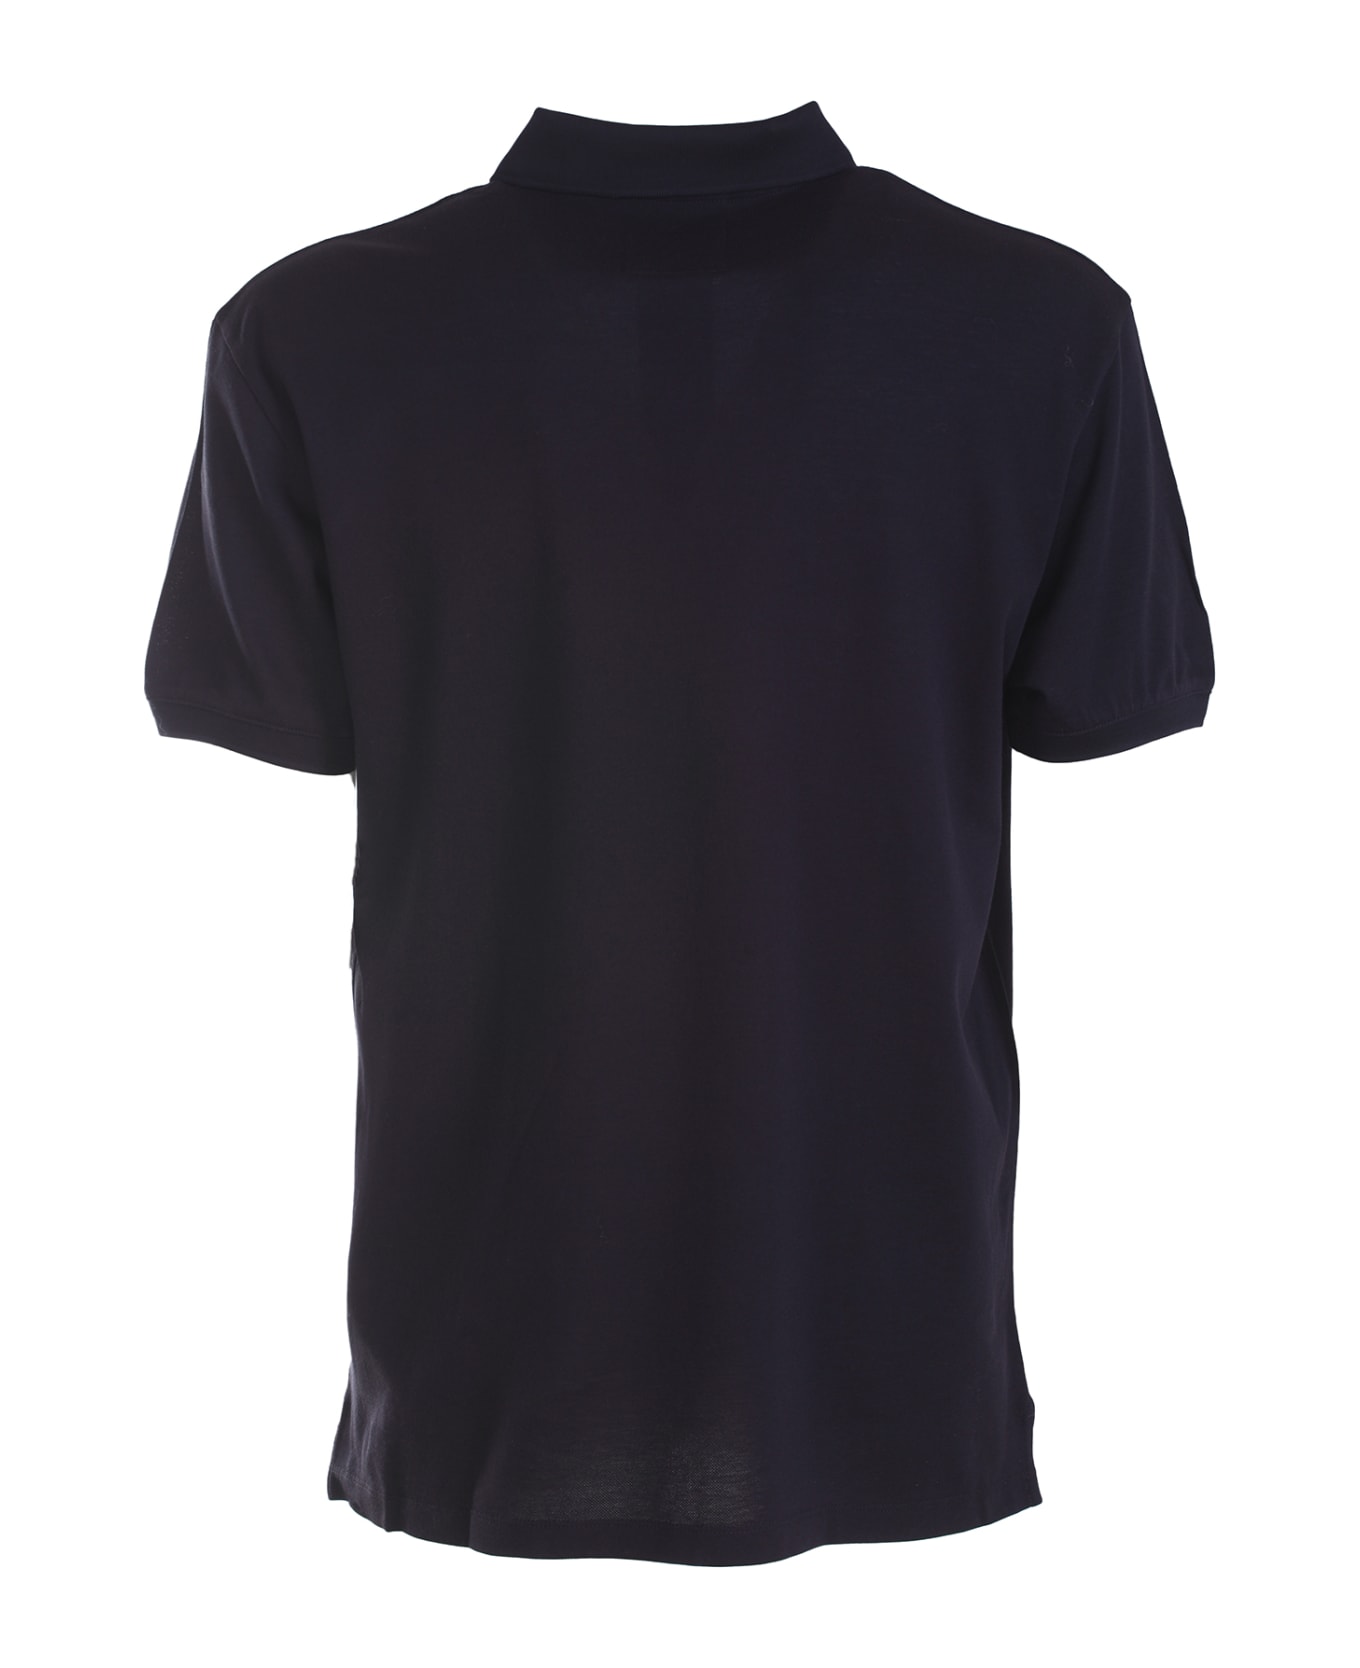 Emporio Armani Polo Shirt - Blu navy